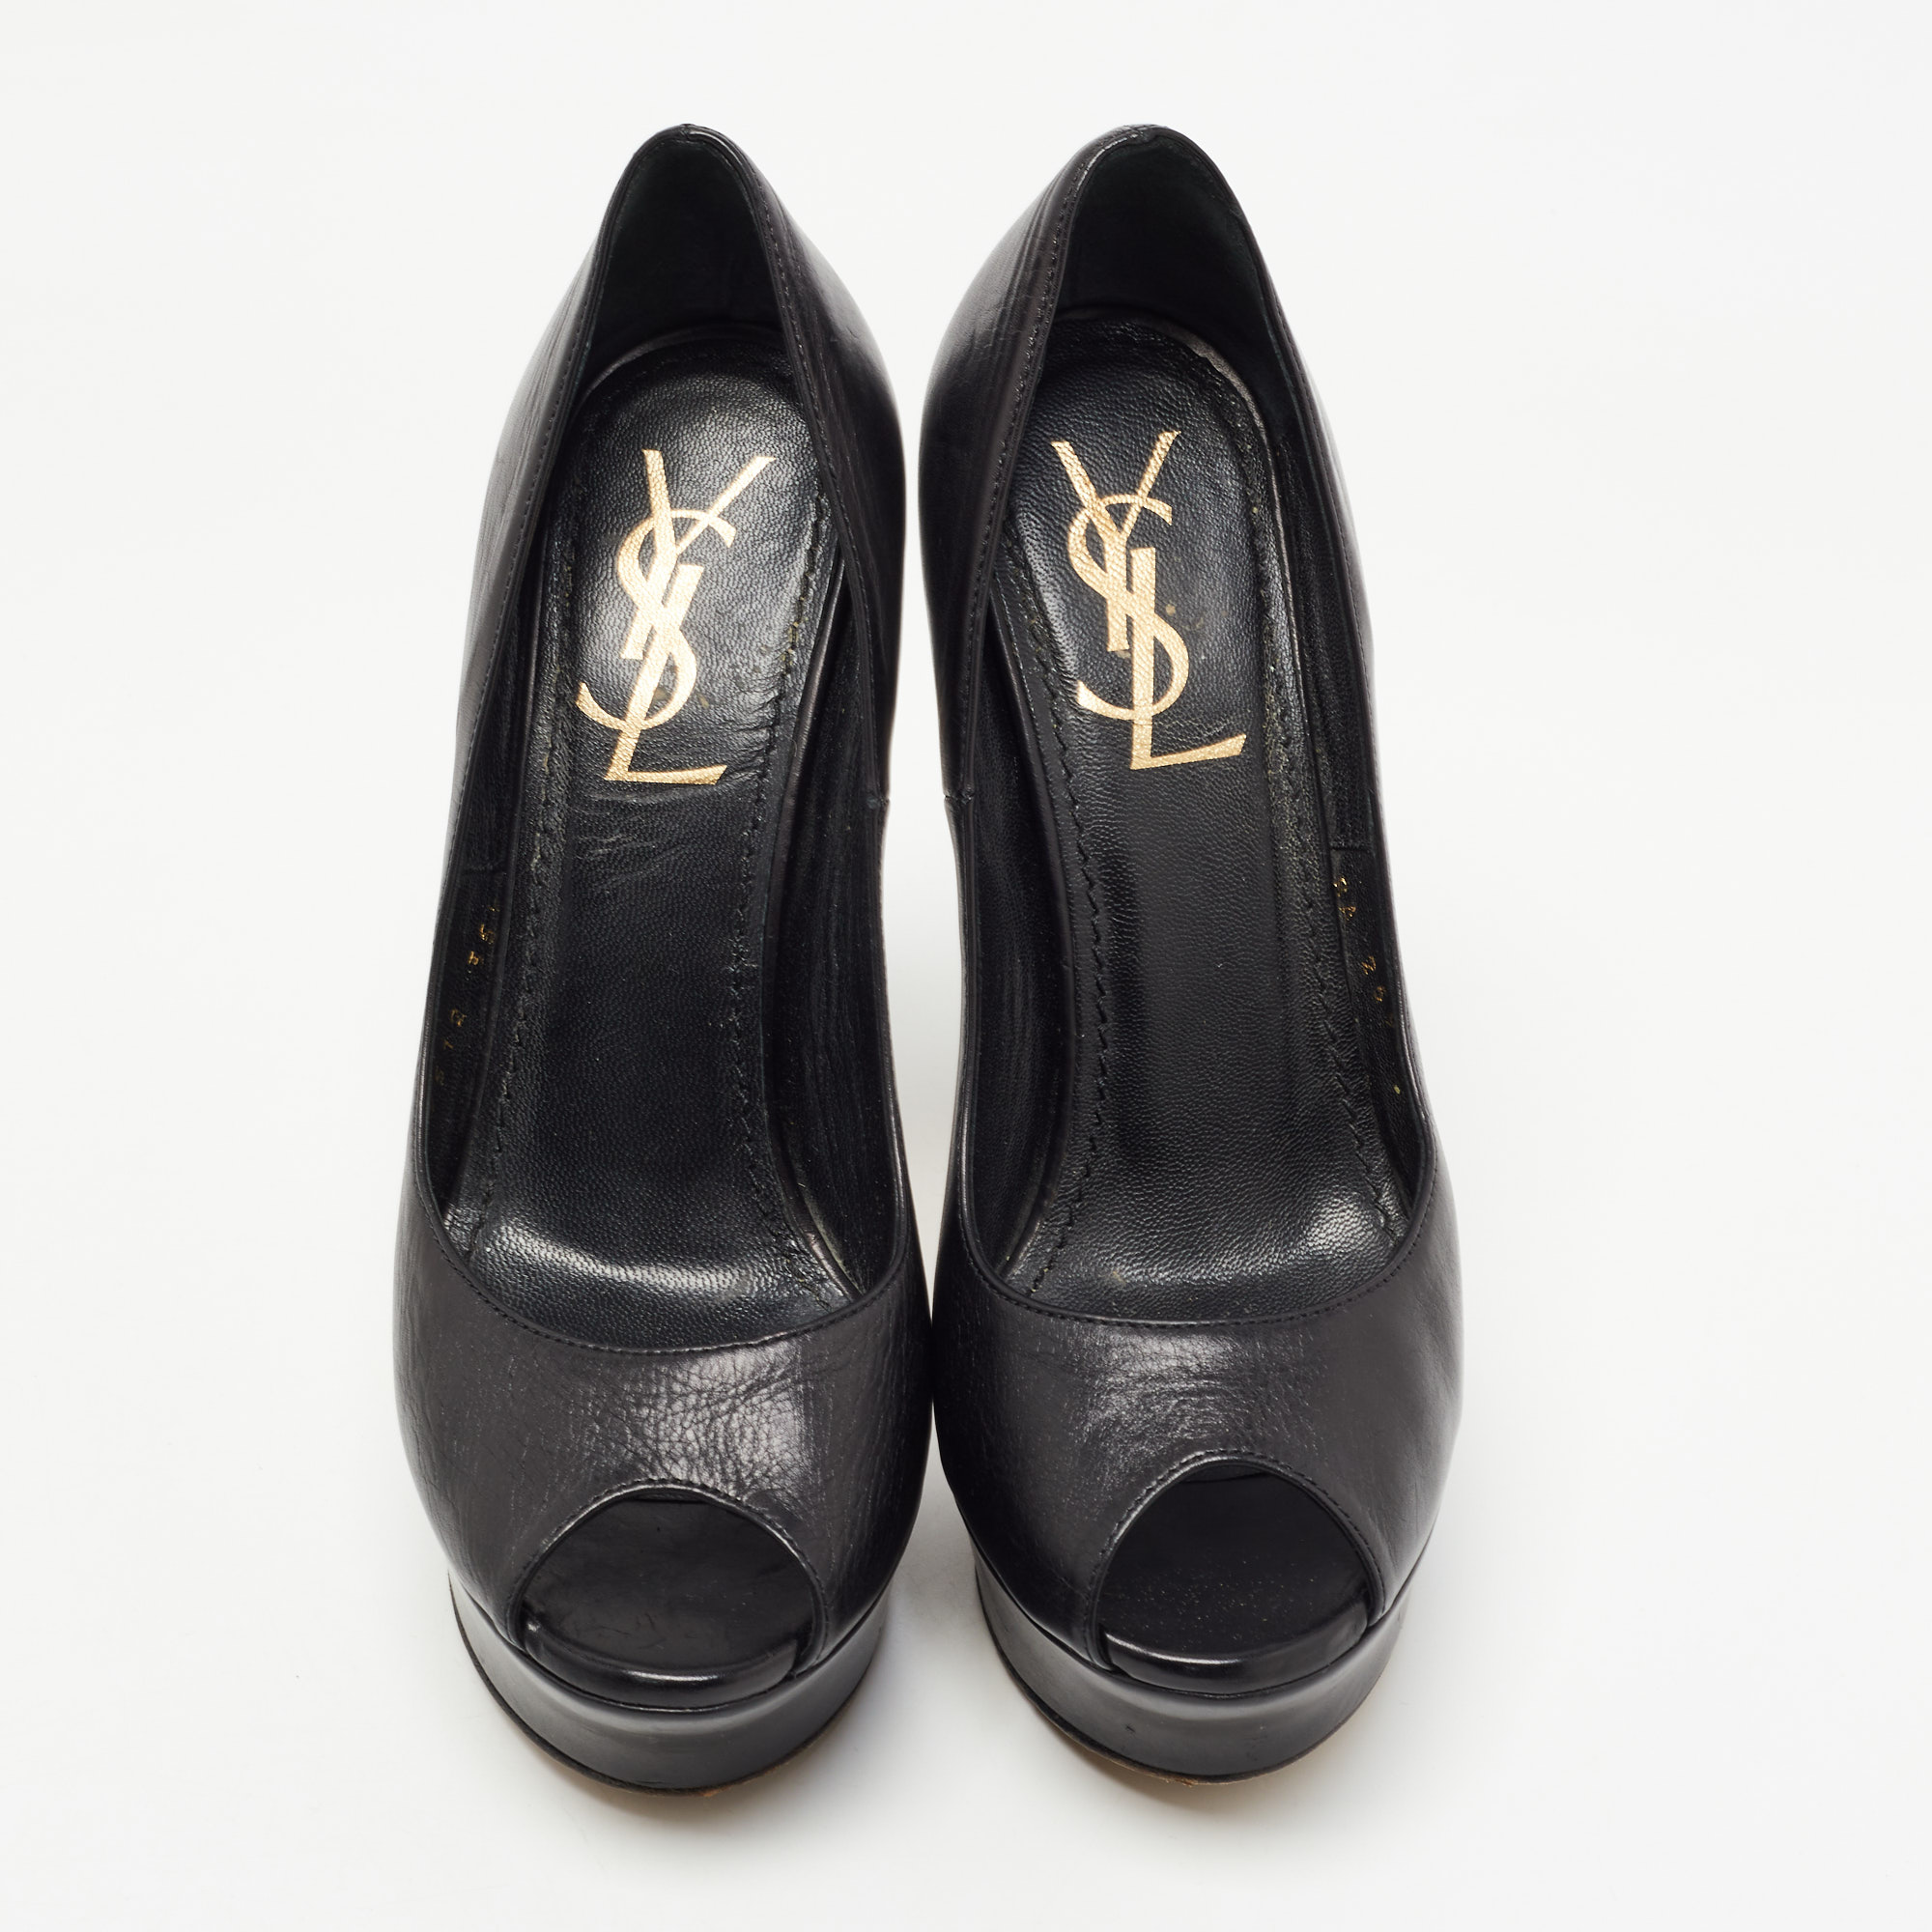 Yves Saint Laurent Black Leather Peep Toe Pumps Size 35.5